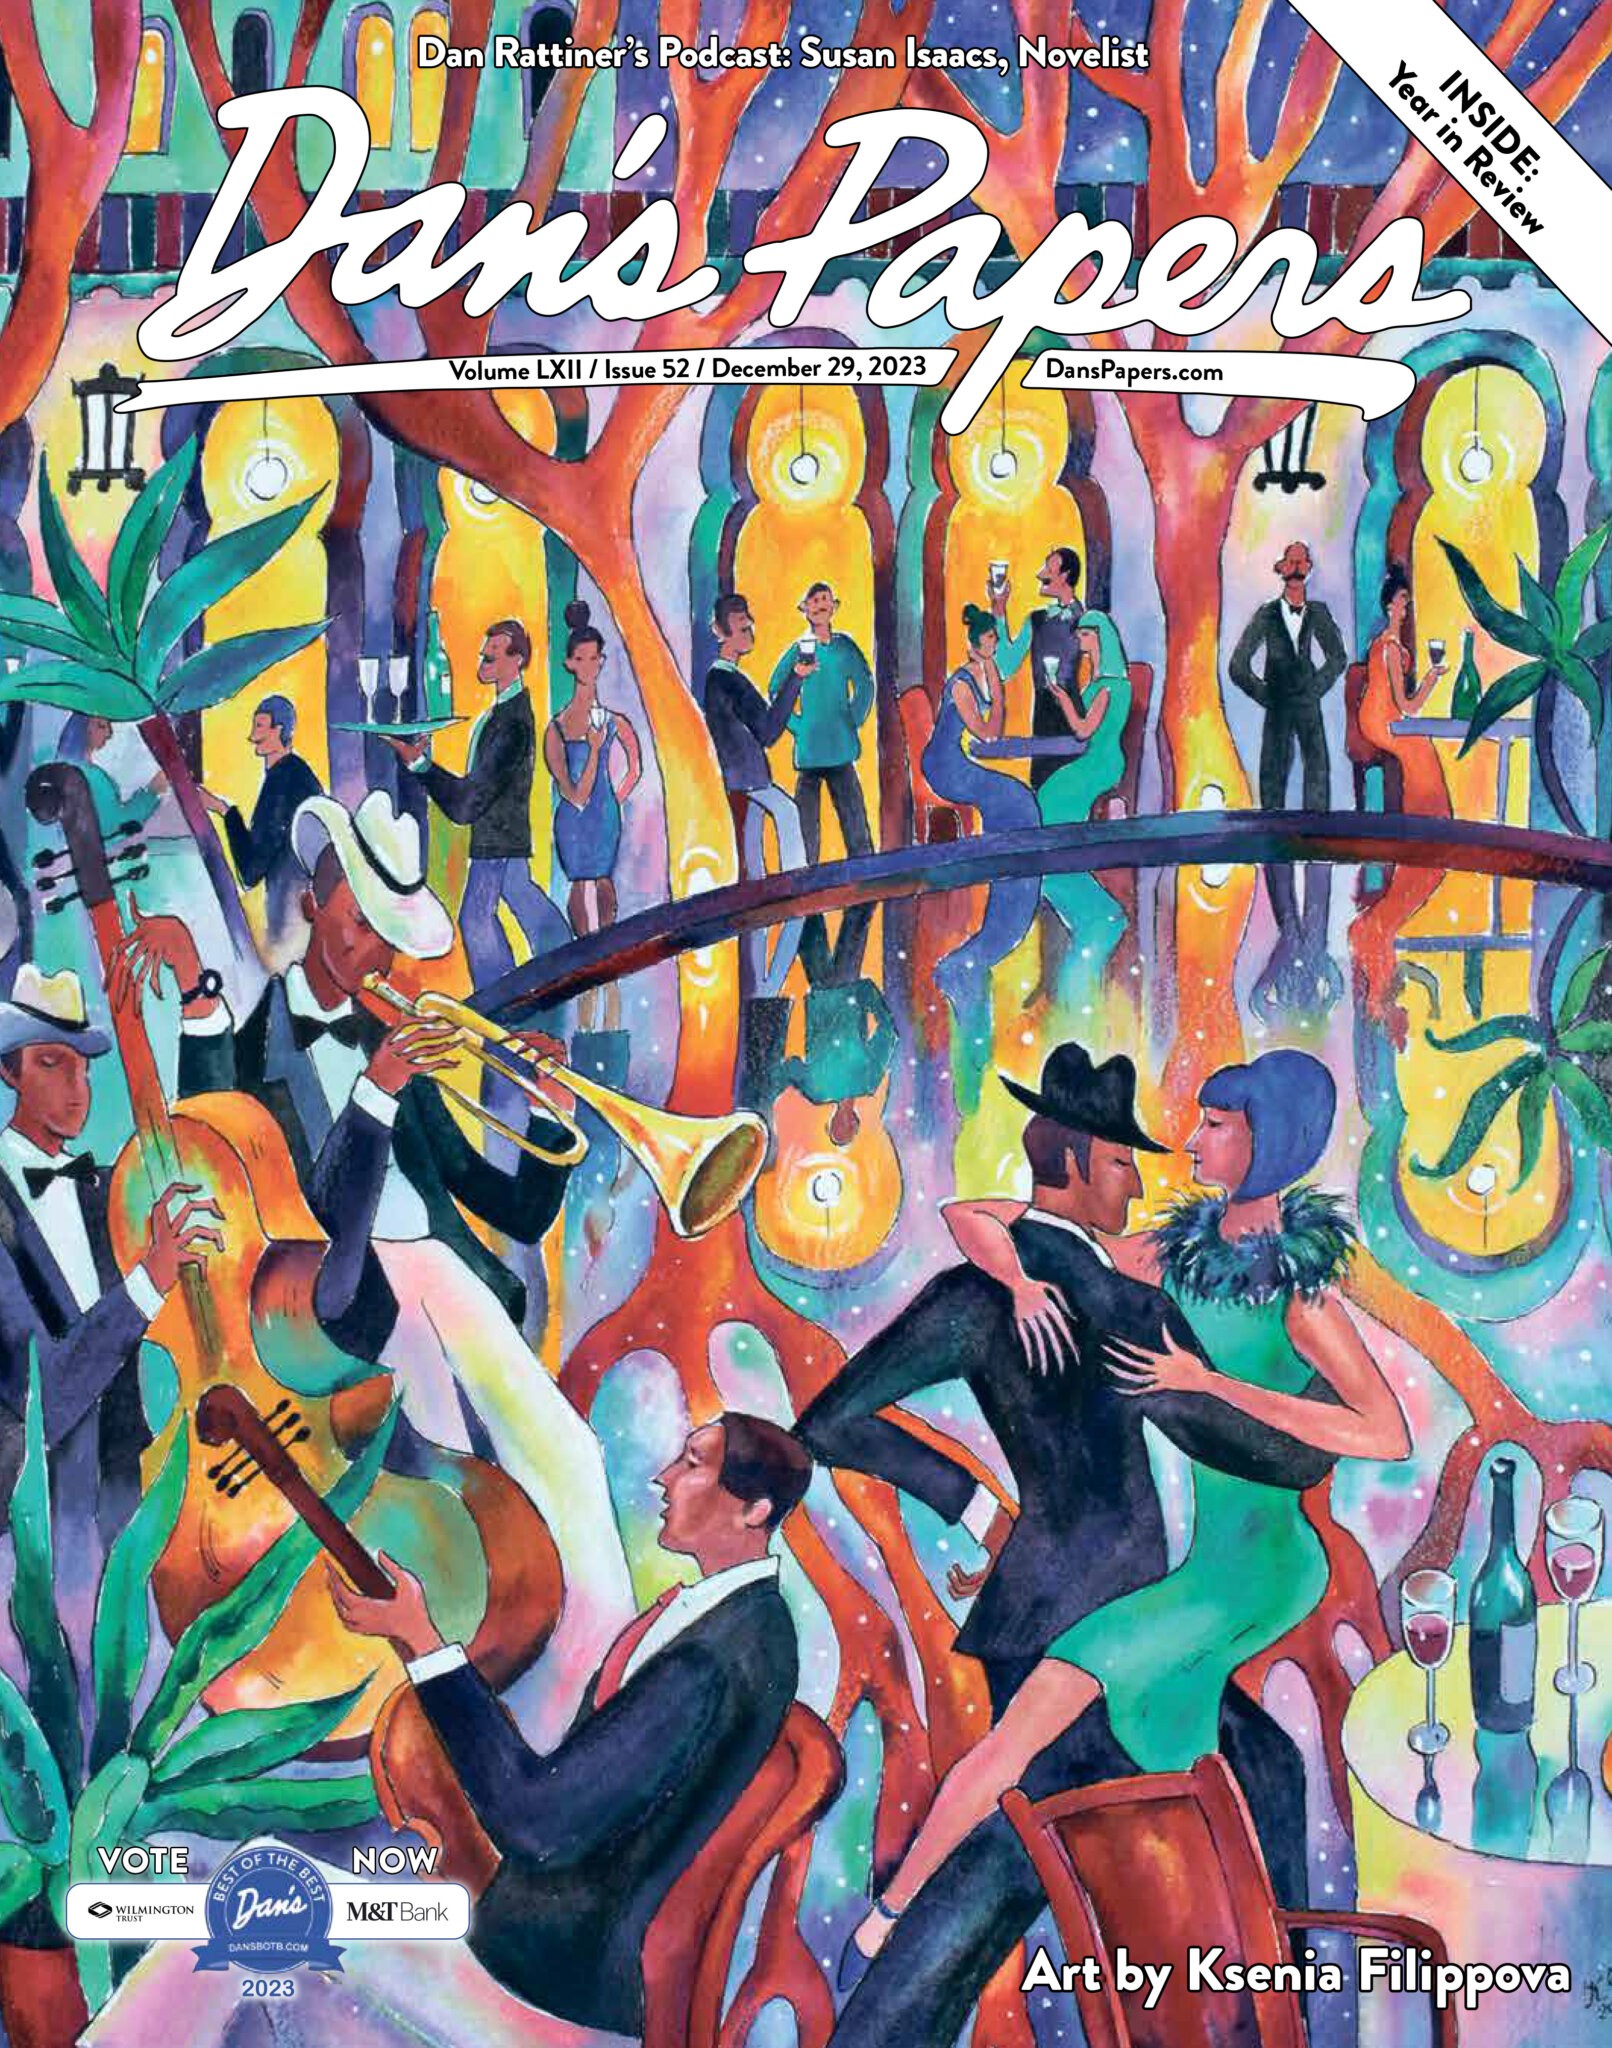 December 29, 2023 Dan's Papers cover art by Ksenia Filippova